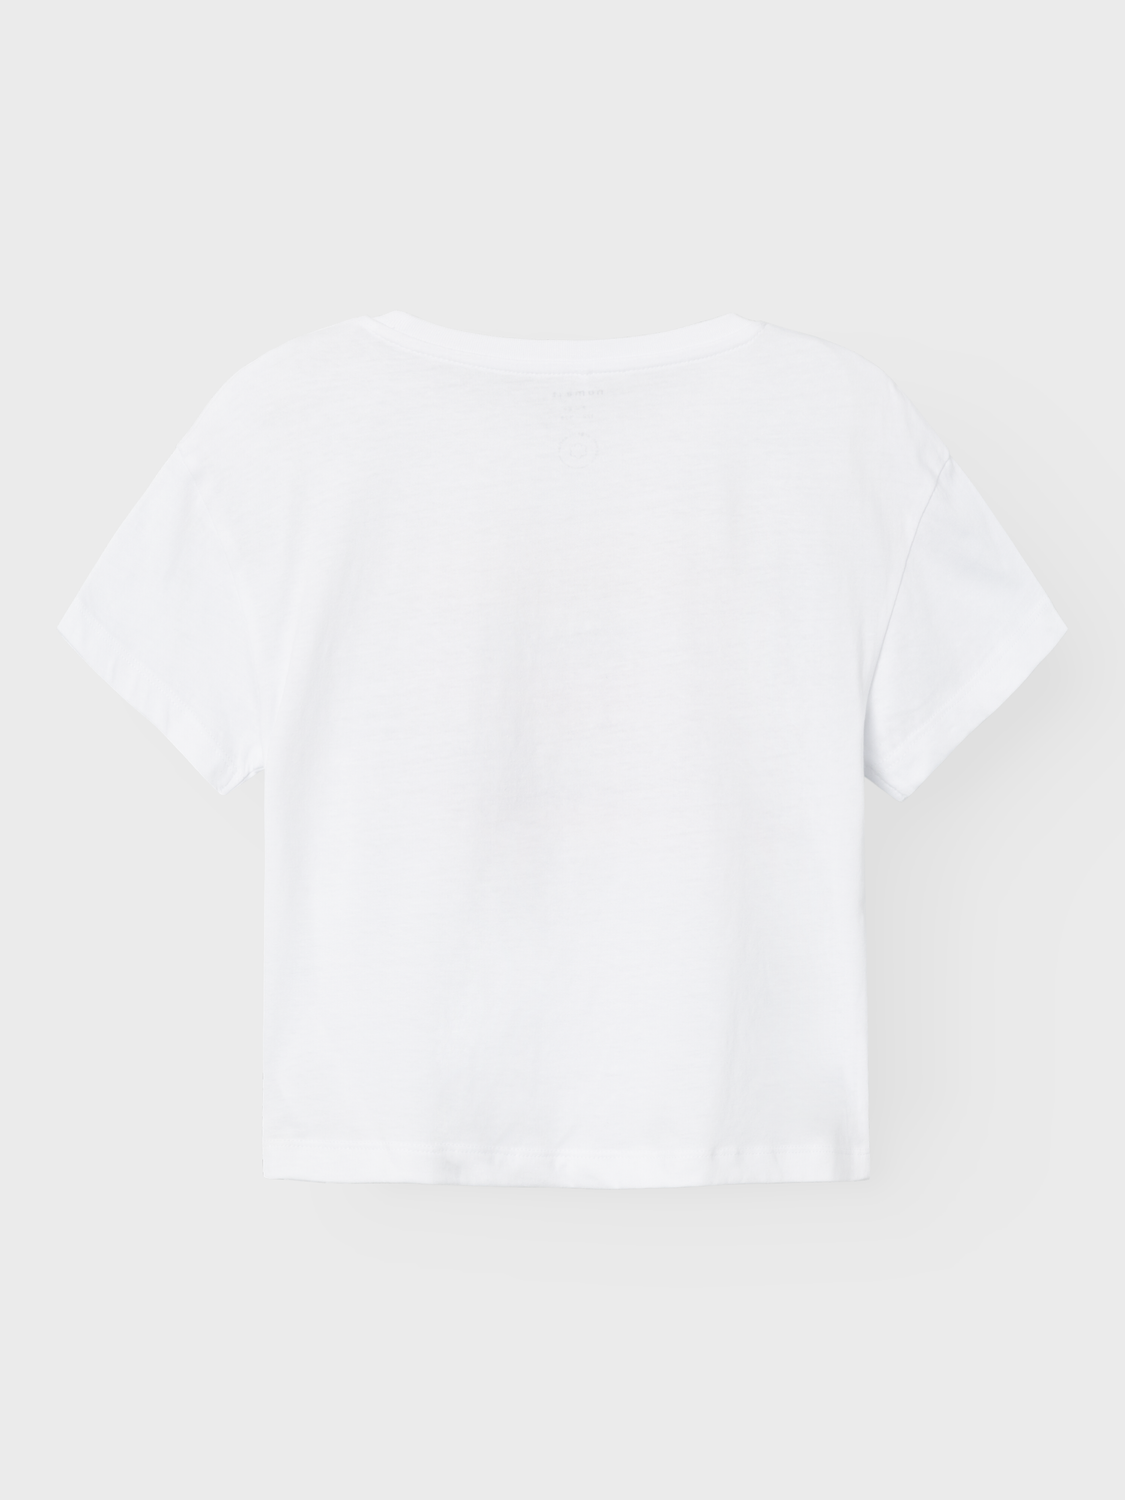 NKFHAMBI T-Shirts & Tops - Bright White